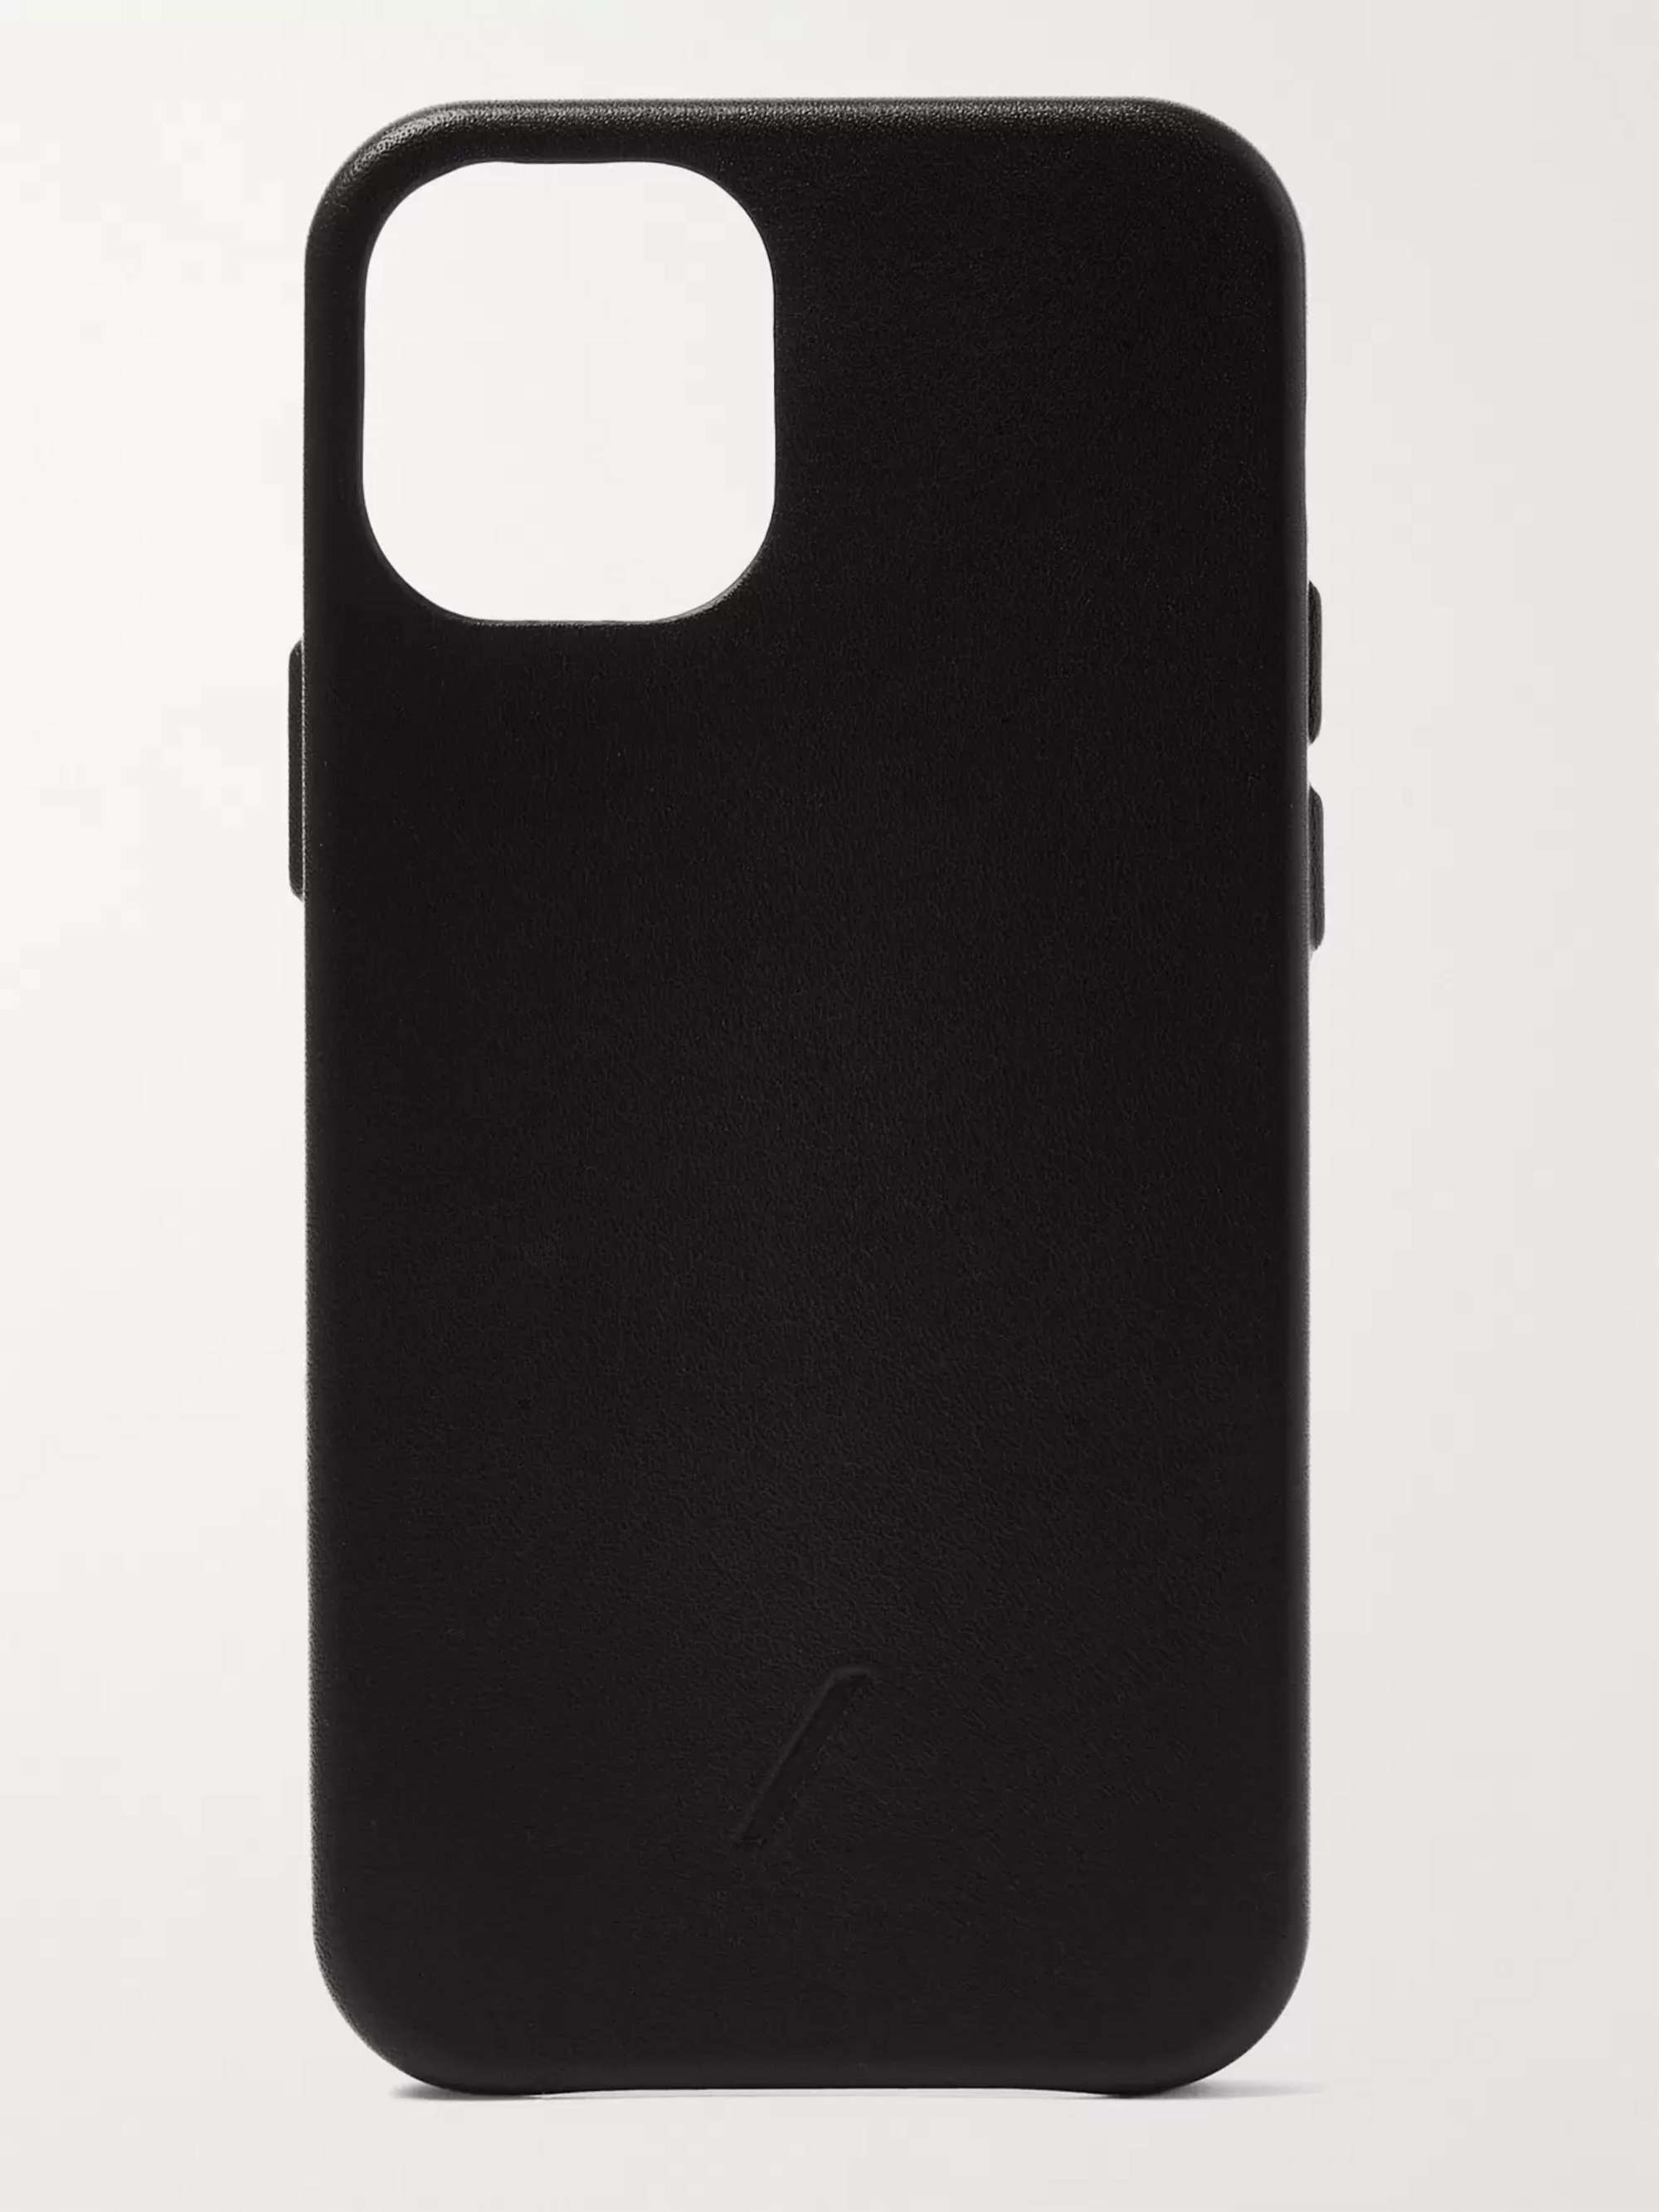 NATIVE UNION Clic Classic Leather iPhone 12 Mini Case